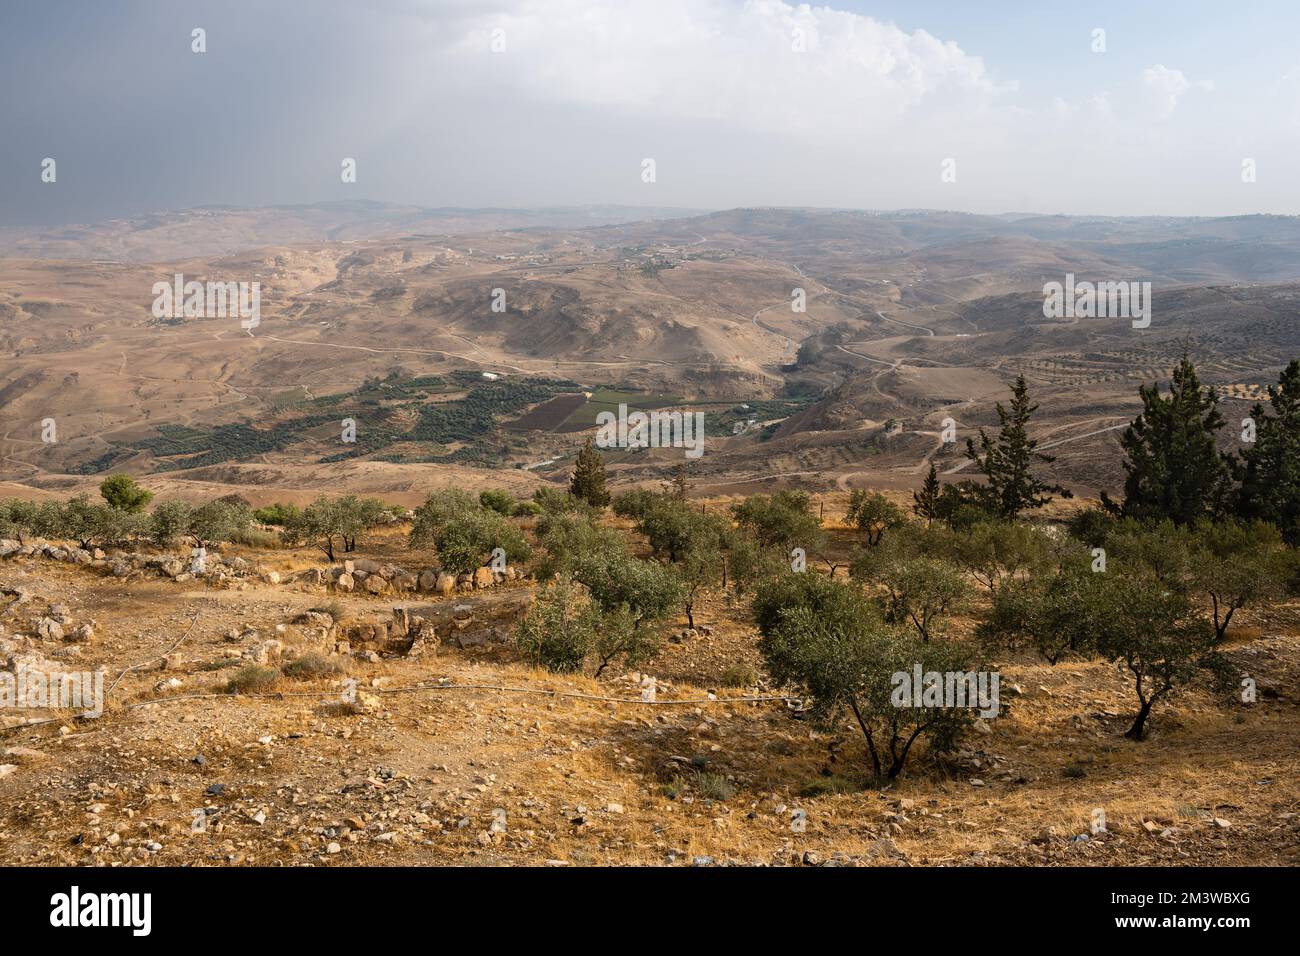 Mount Nebo Landscape with Khirbet al-Mukhayyat Village in Jordan with Olive Trees Stock Photo